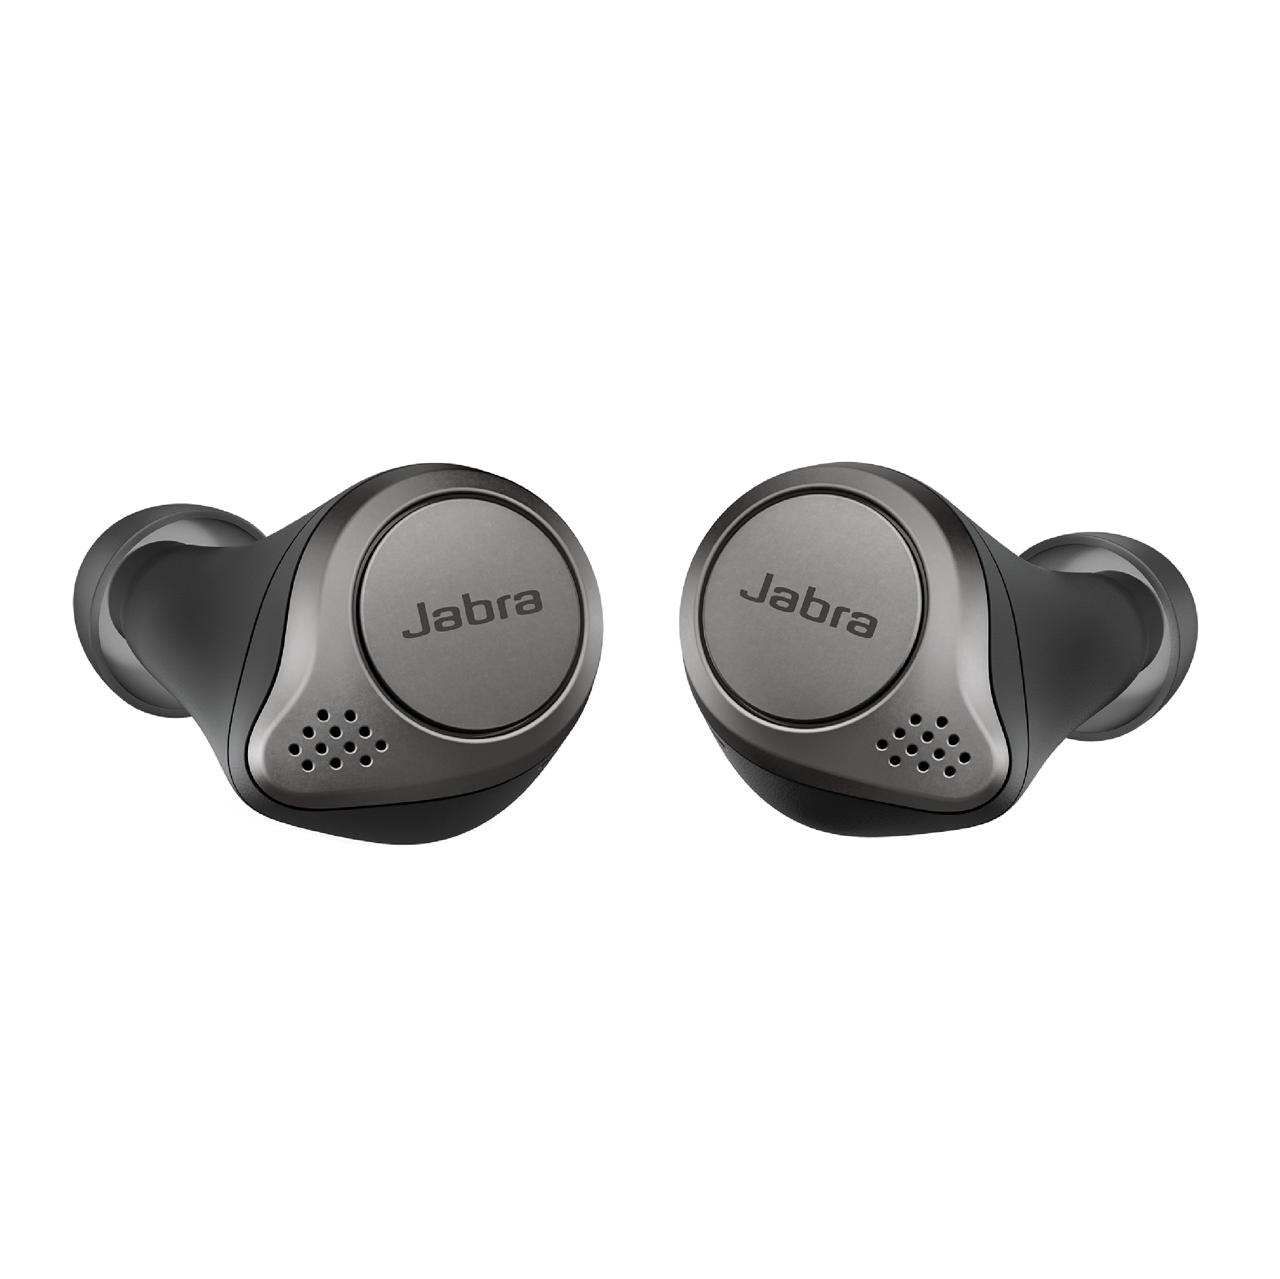 Jabra Elite 75t Earbuds True Wireless Headphones with Charging Case, Black, 100-99090000-02 - image 1 of 7